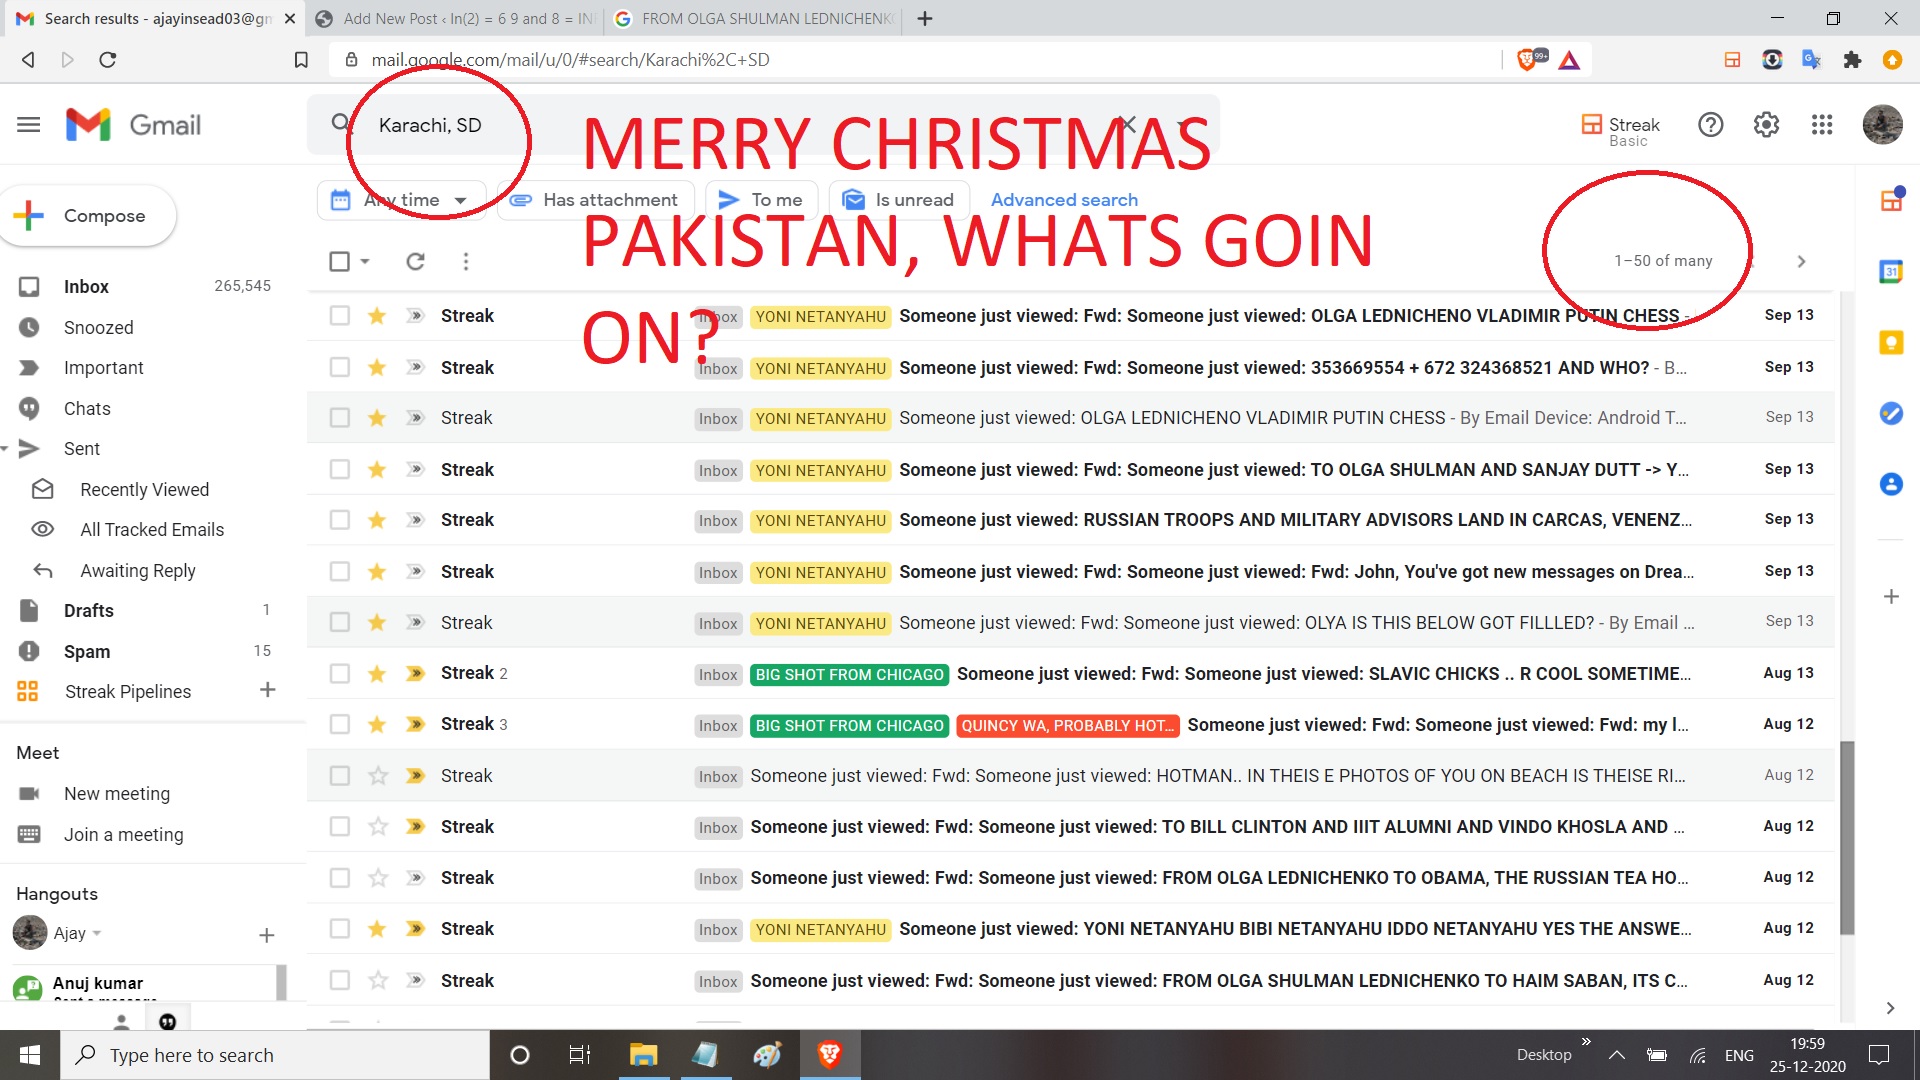 WOW KARAHI PAKISTAN - MORE THAN 50 CLICKS IN FEW MINUTES.. MERRY CHRISTMAS TO PAKISTANIS ALSO